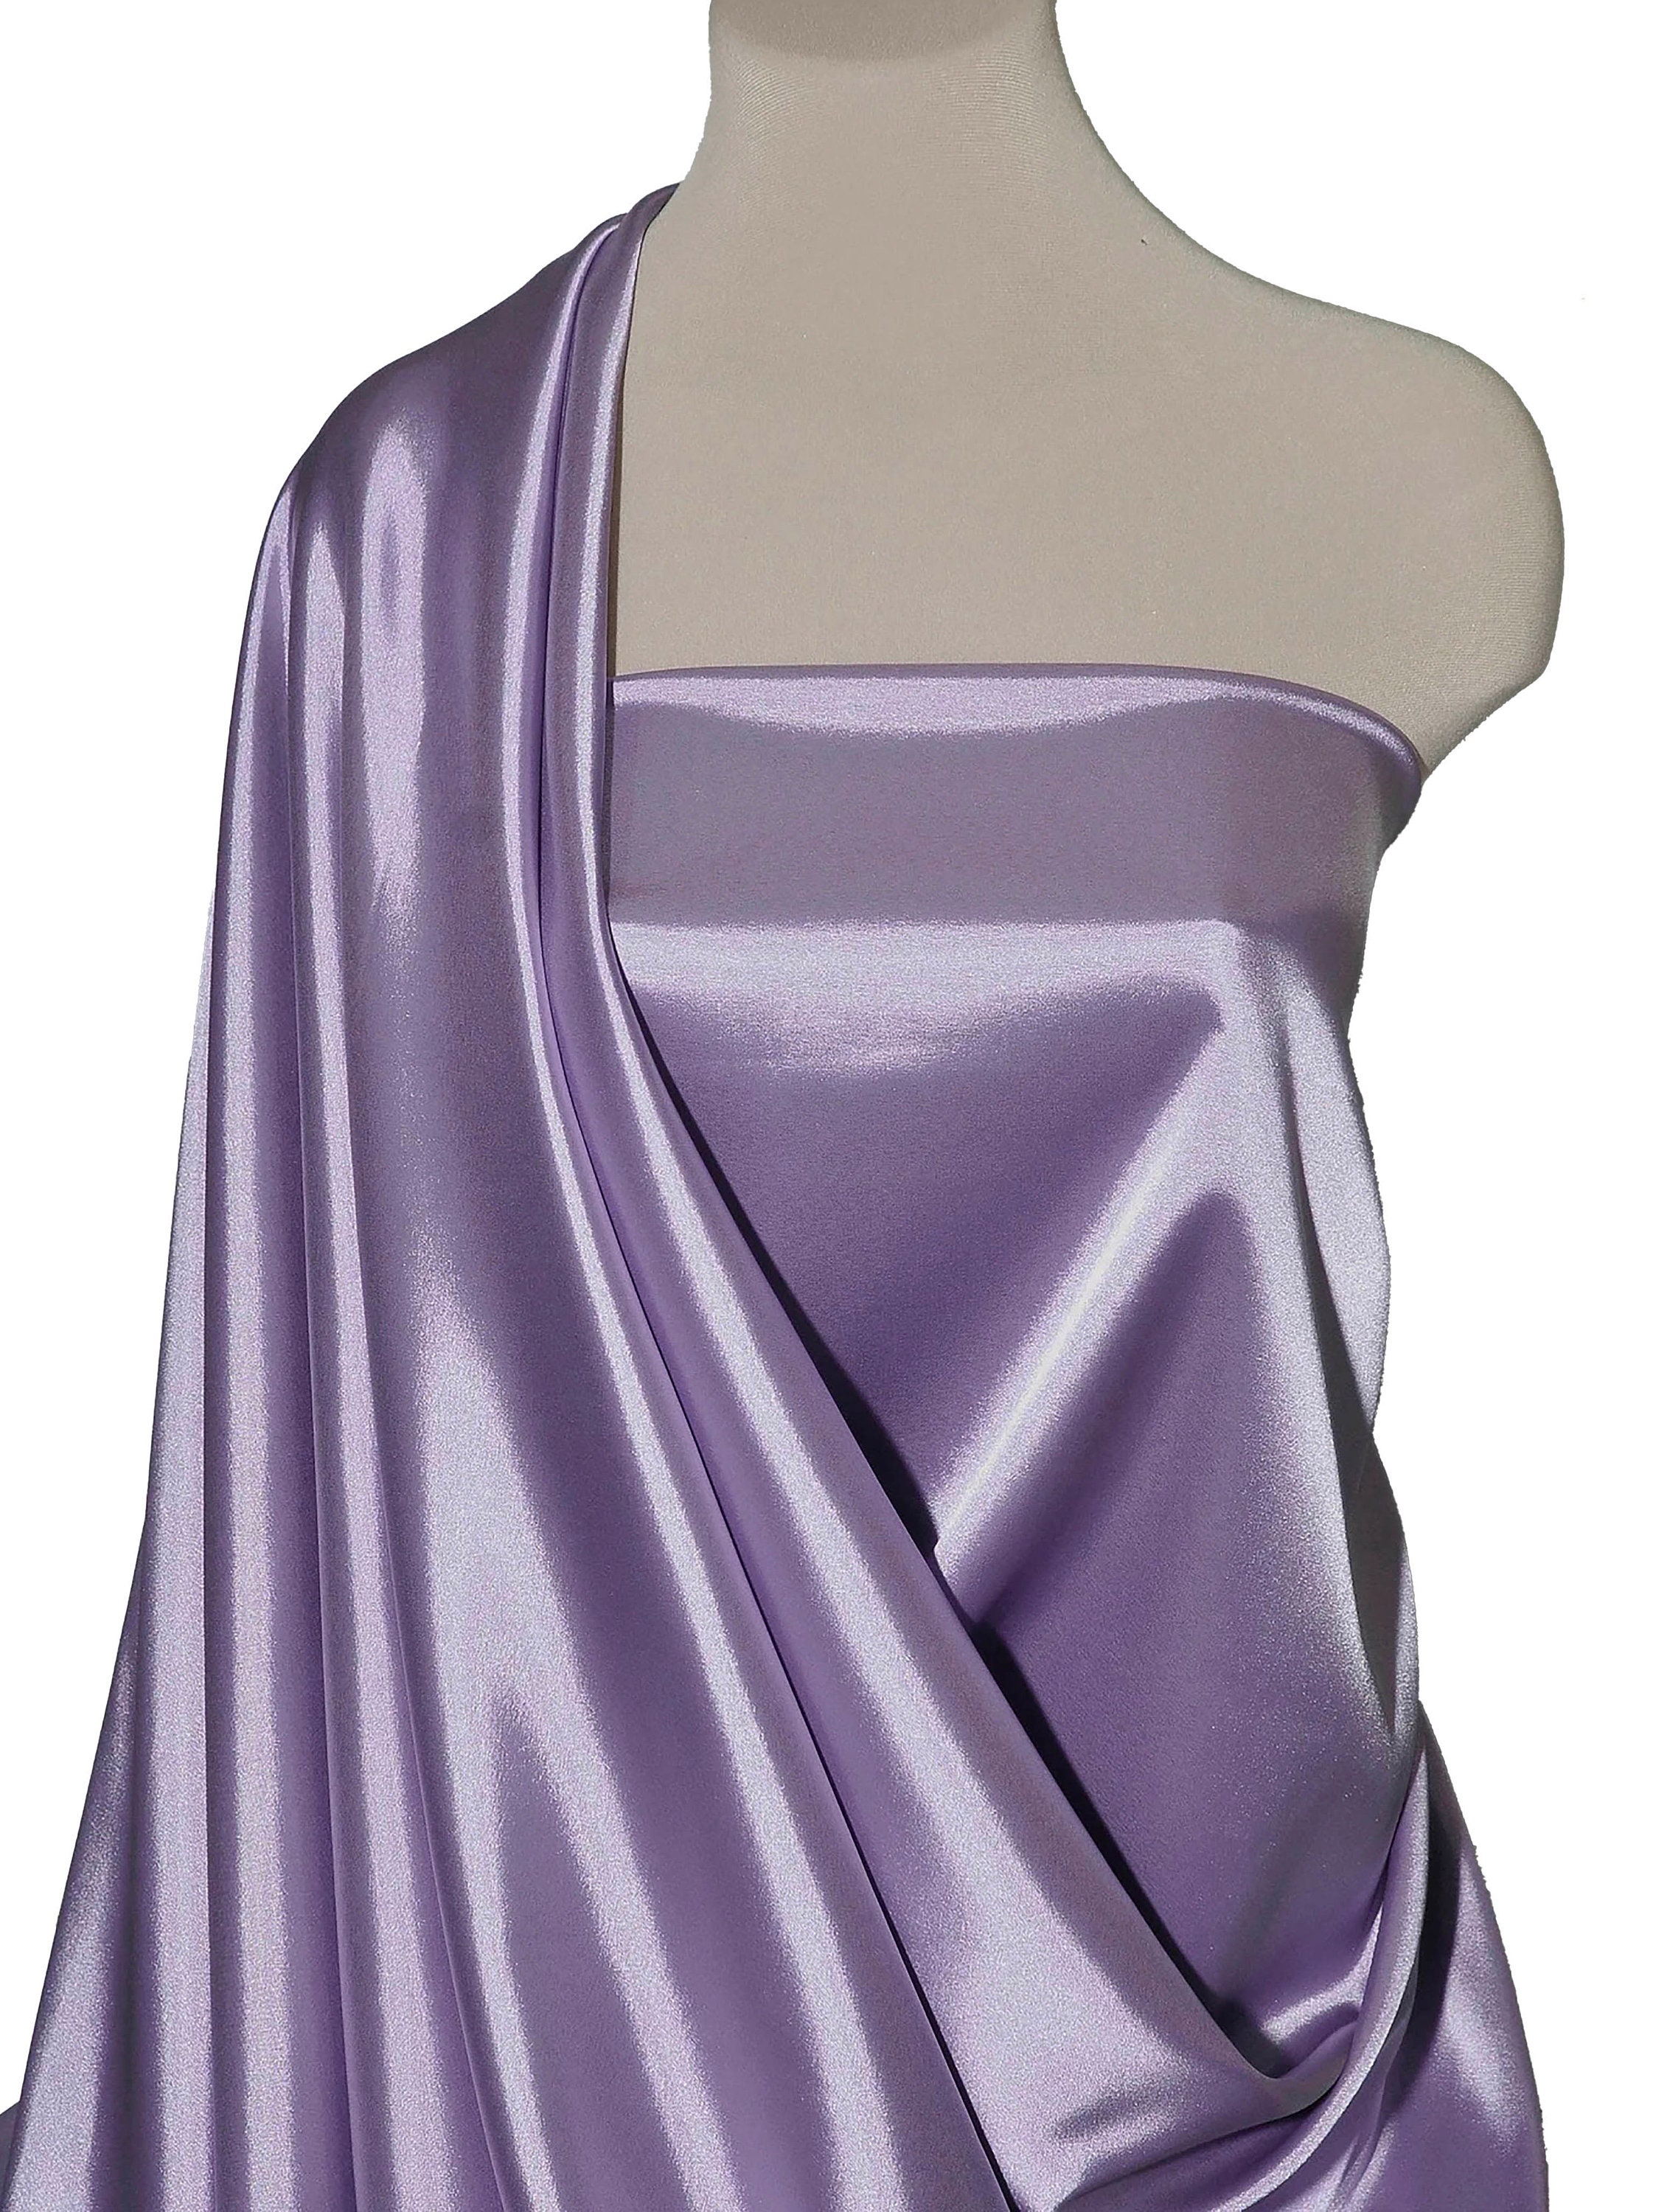 Swimwear Fabric Light Violet Spandex Fabric Material Nylon Spandex Lavender  Stretch Fabric 140cm 55 Wide 